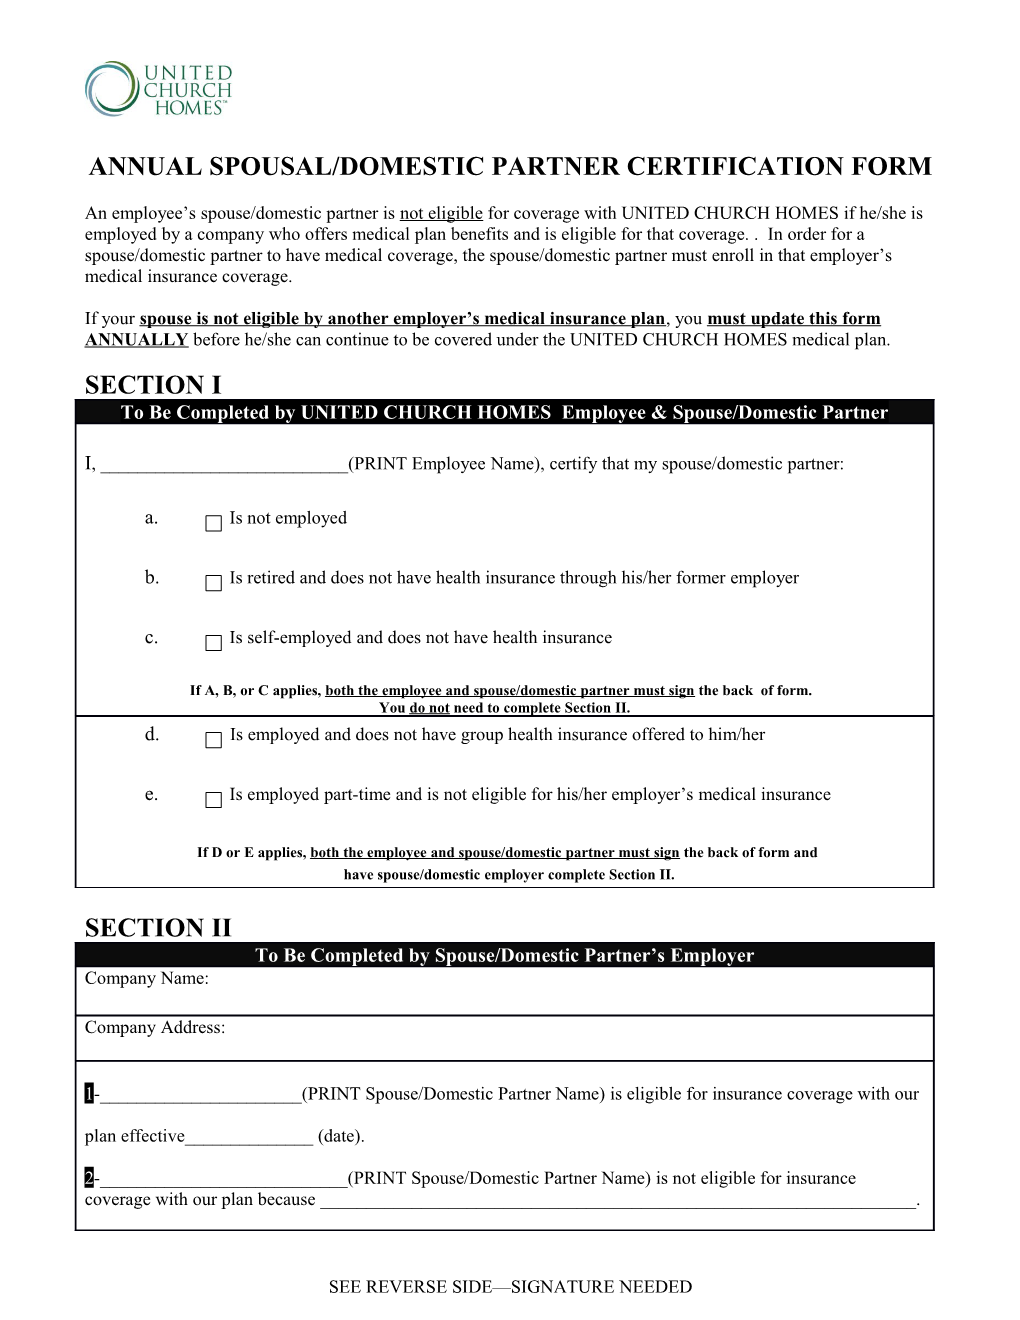 Annualspousal/Domestic Partner Certification Form